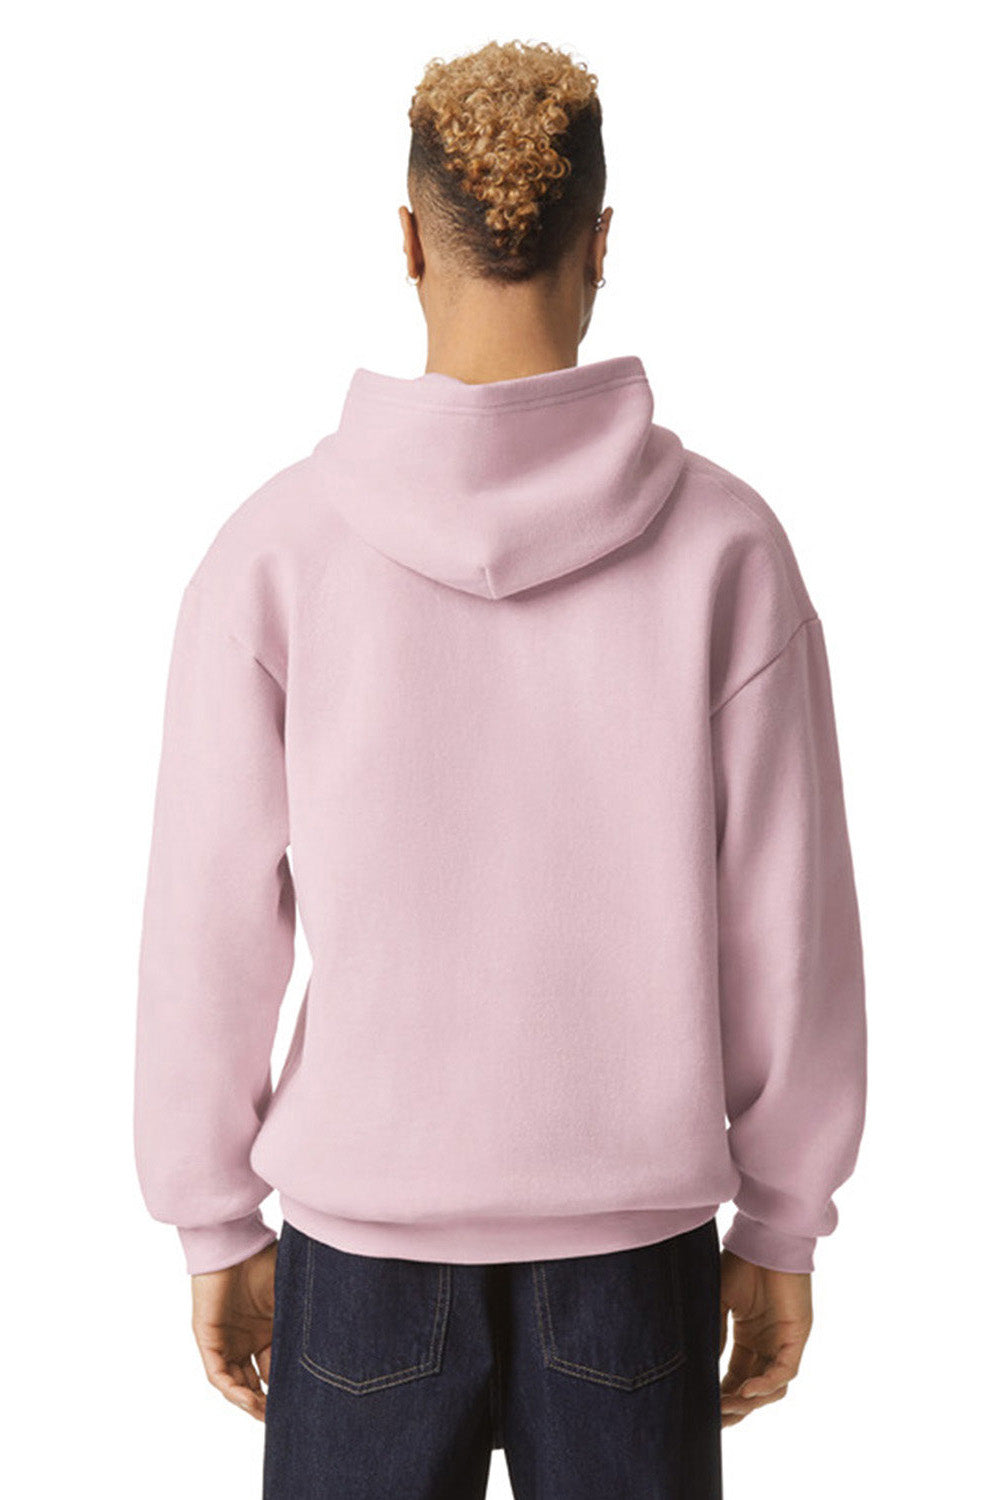 American Apparel RF498 Mens ReFlex Fleece Hooded Sweatshirt Hoodie Blush Pink Model Back